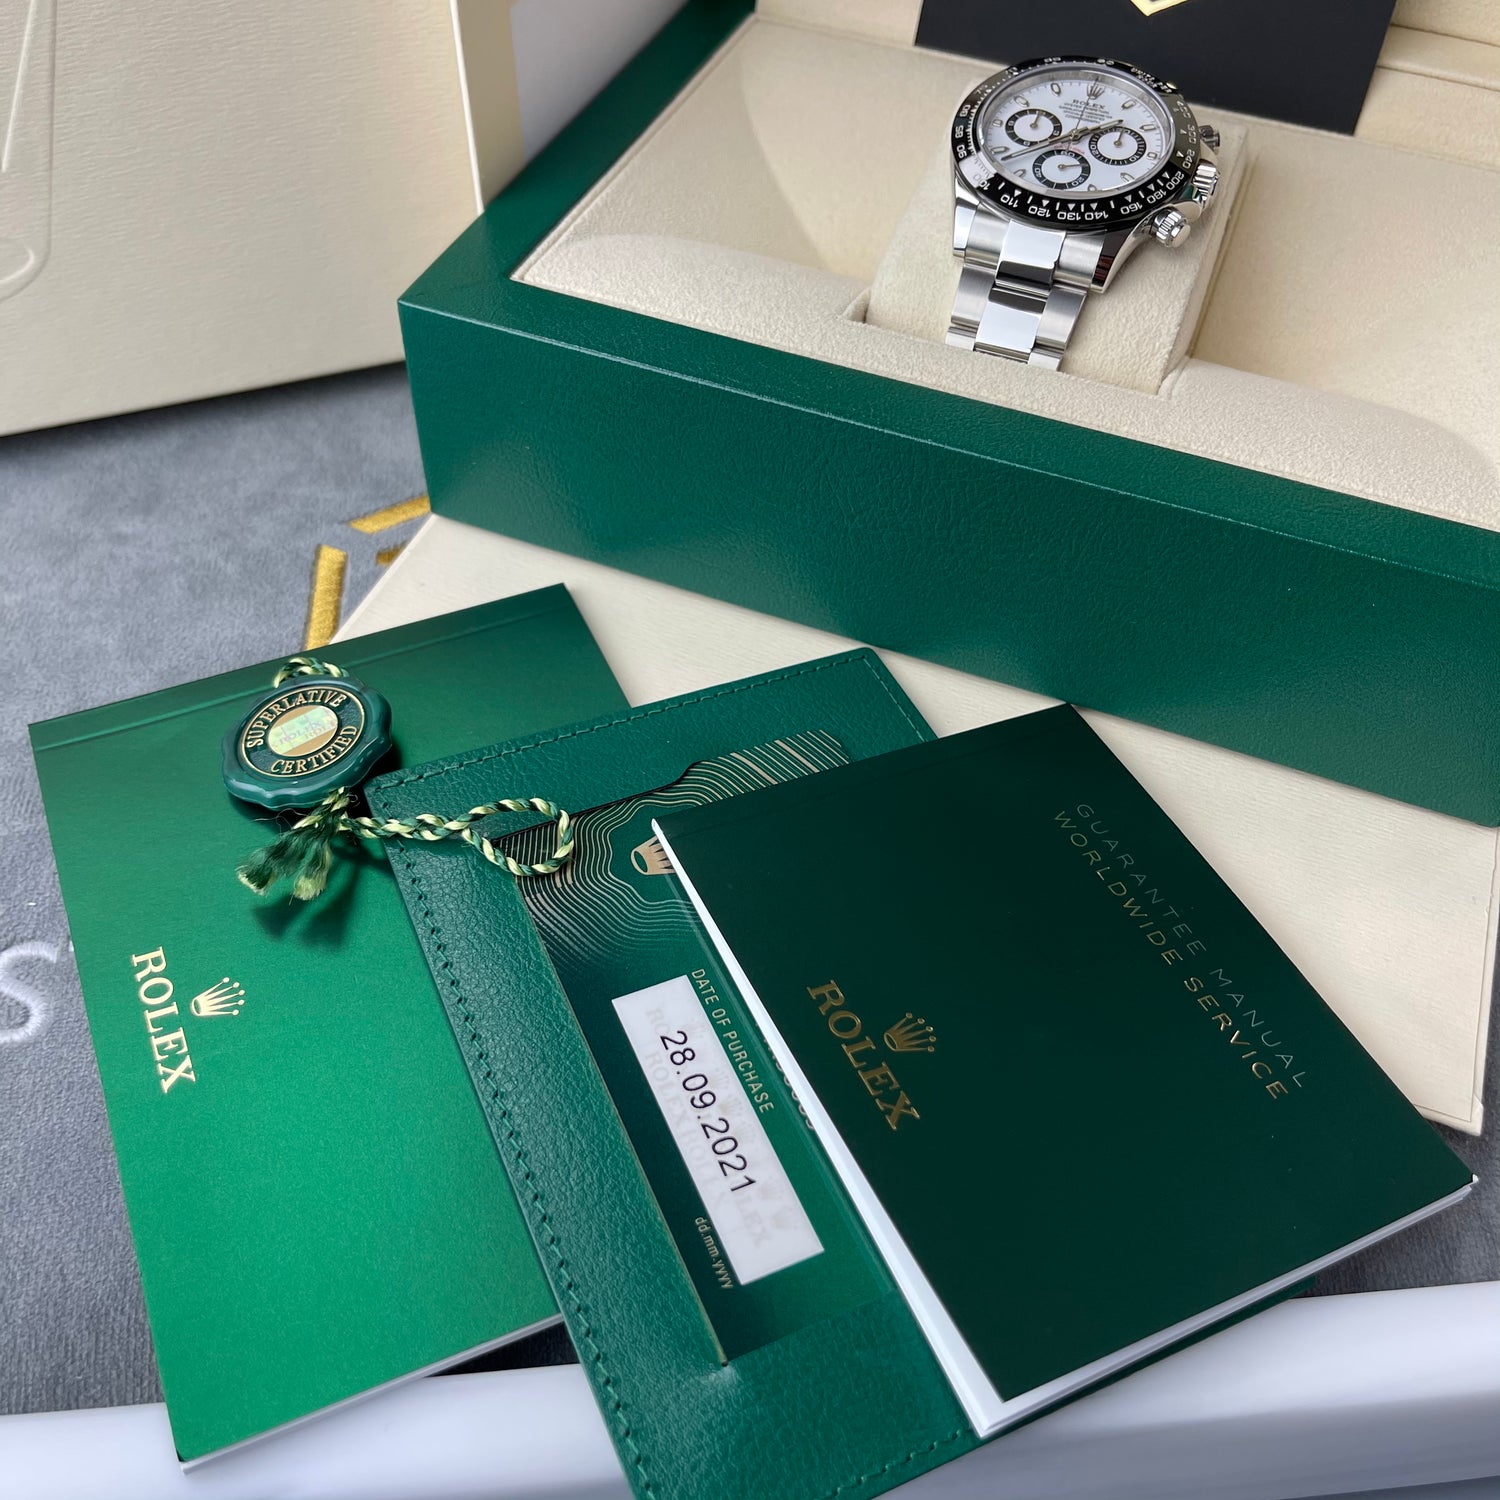 Rolex Cosmograph Daytona Ceramic White 'Panda' Dial 116500LN Unworn 2021 Full Set Watch